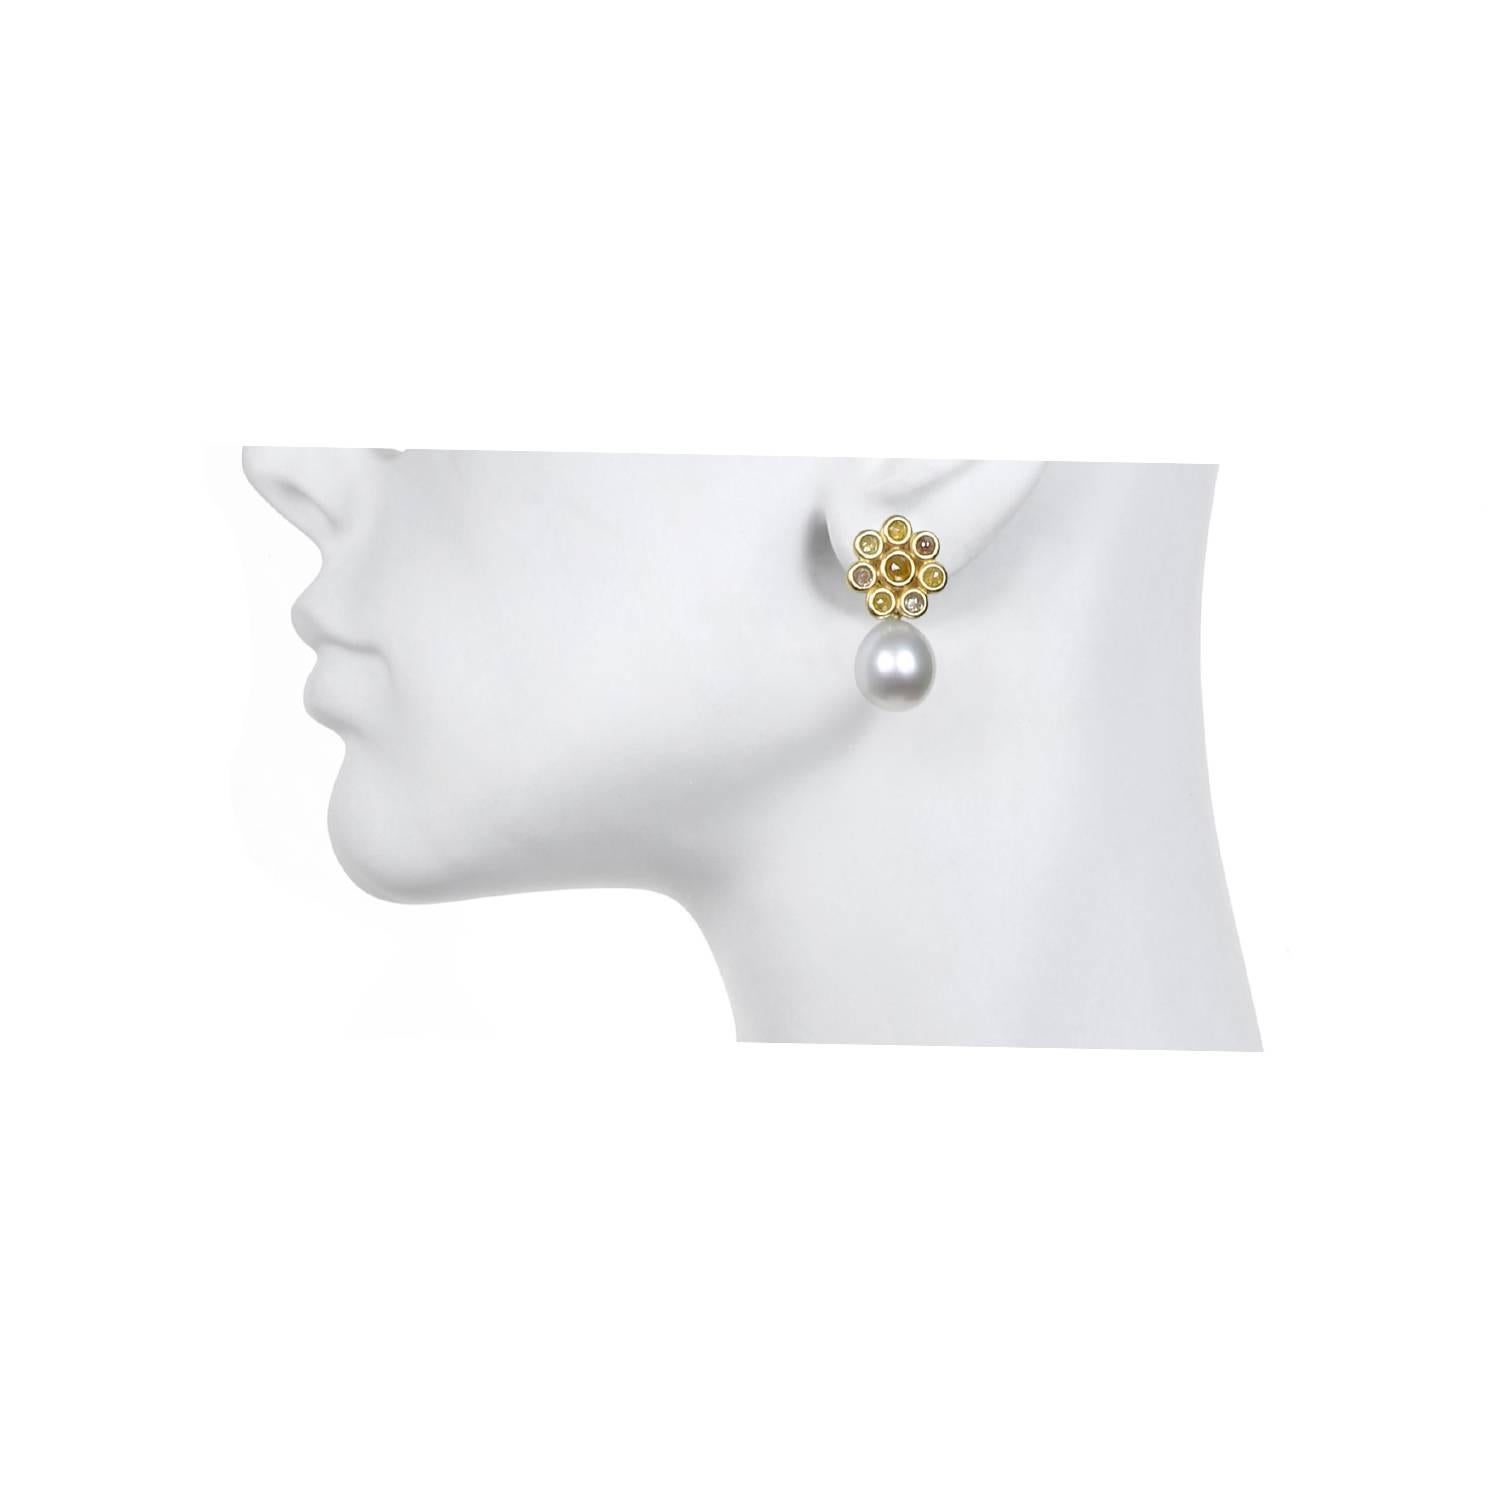 Faye Kim 18k Gold Raw Diamond Daisy Earrings with White South Sea Pearl Drops 5